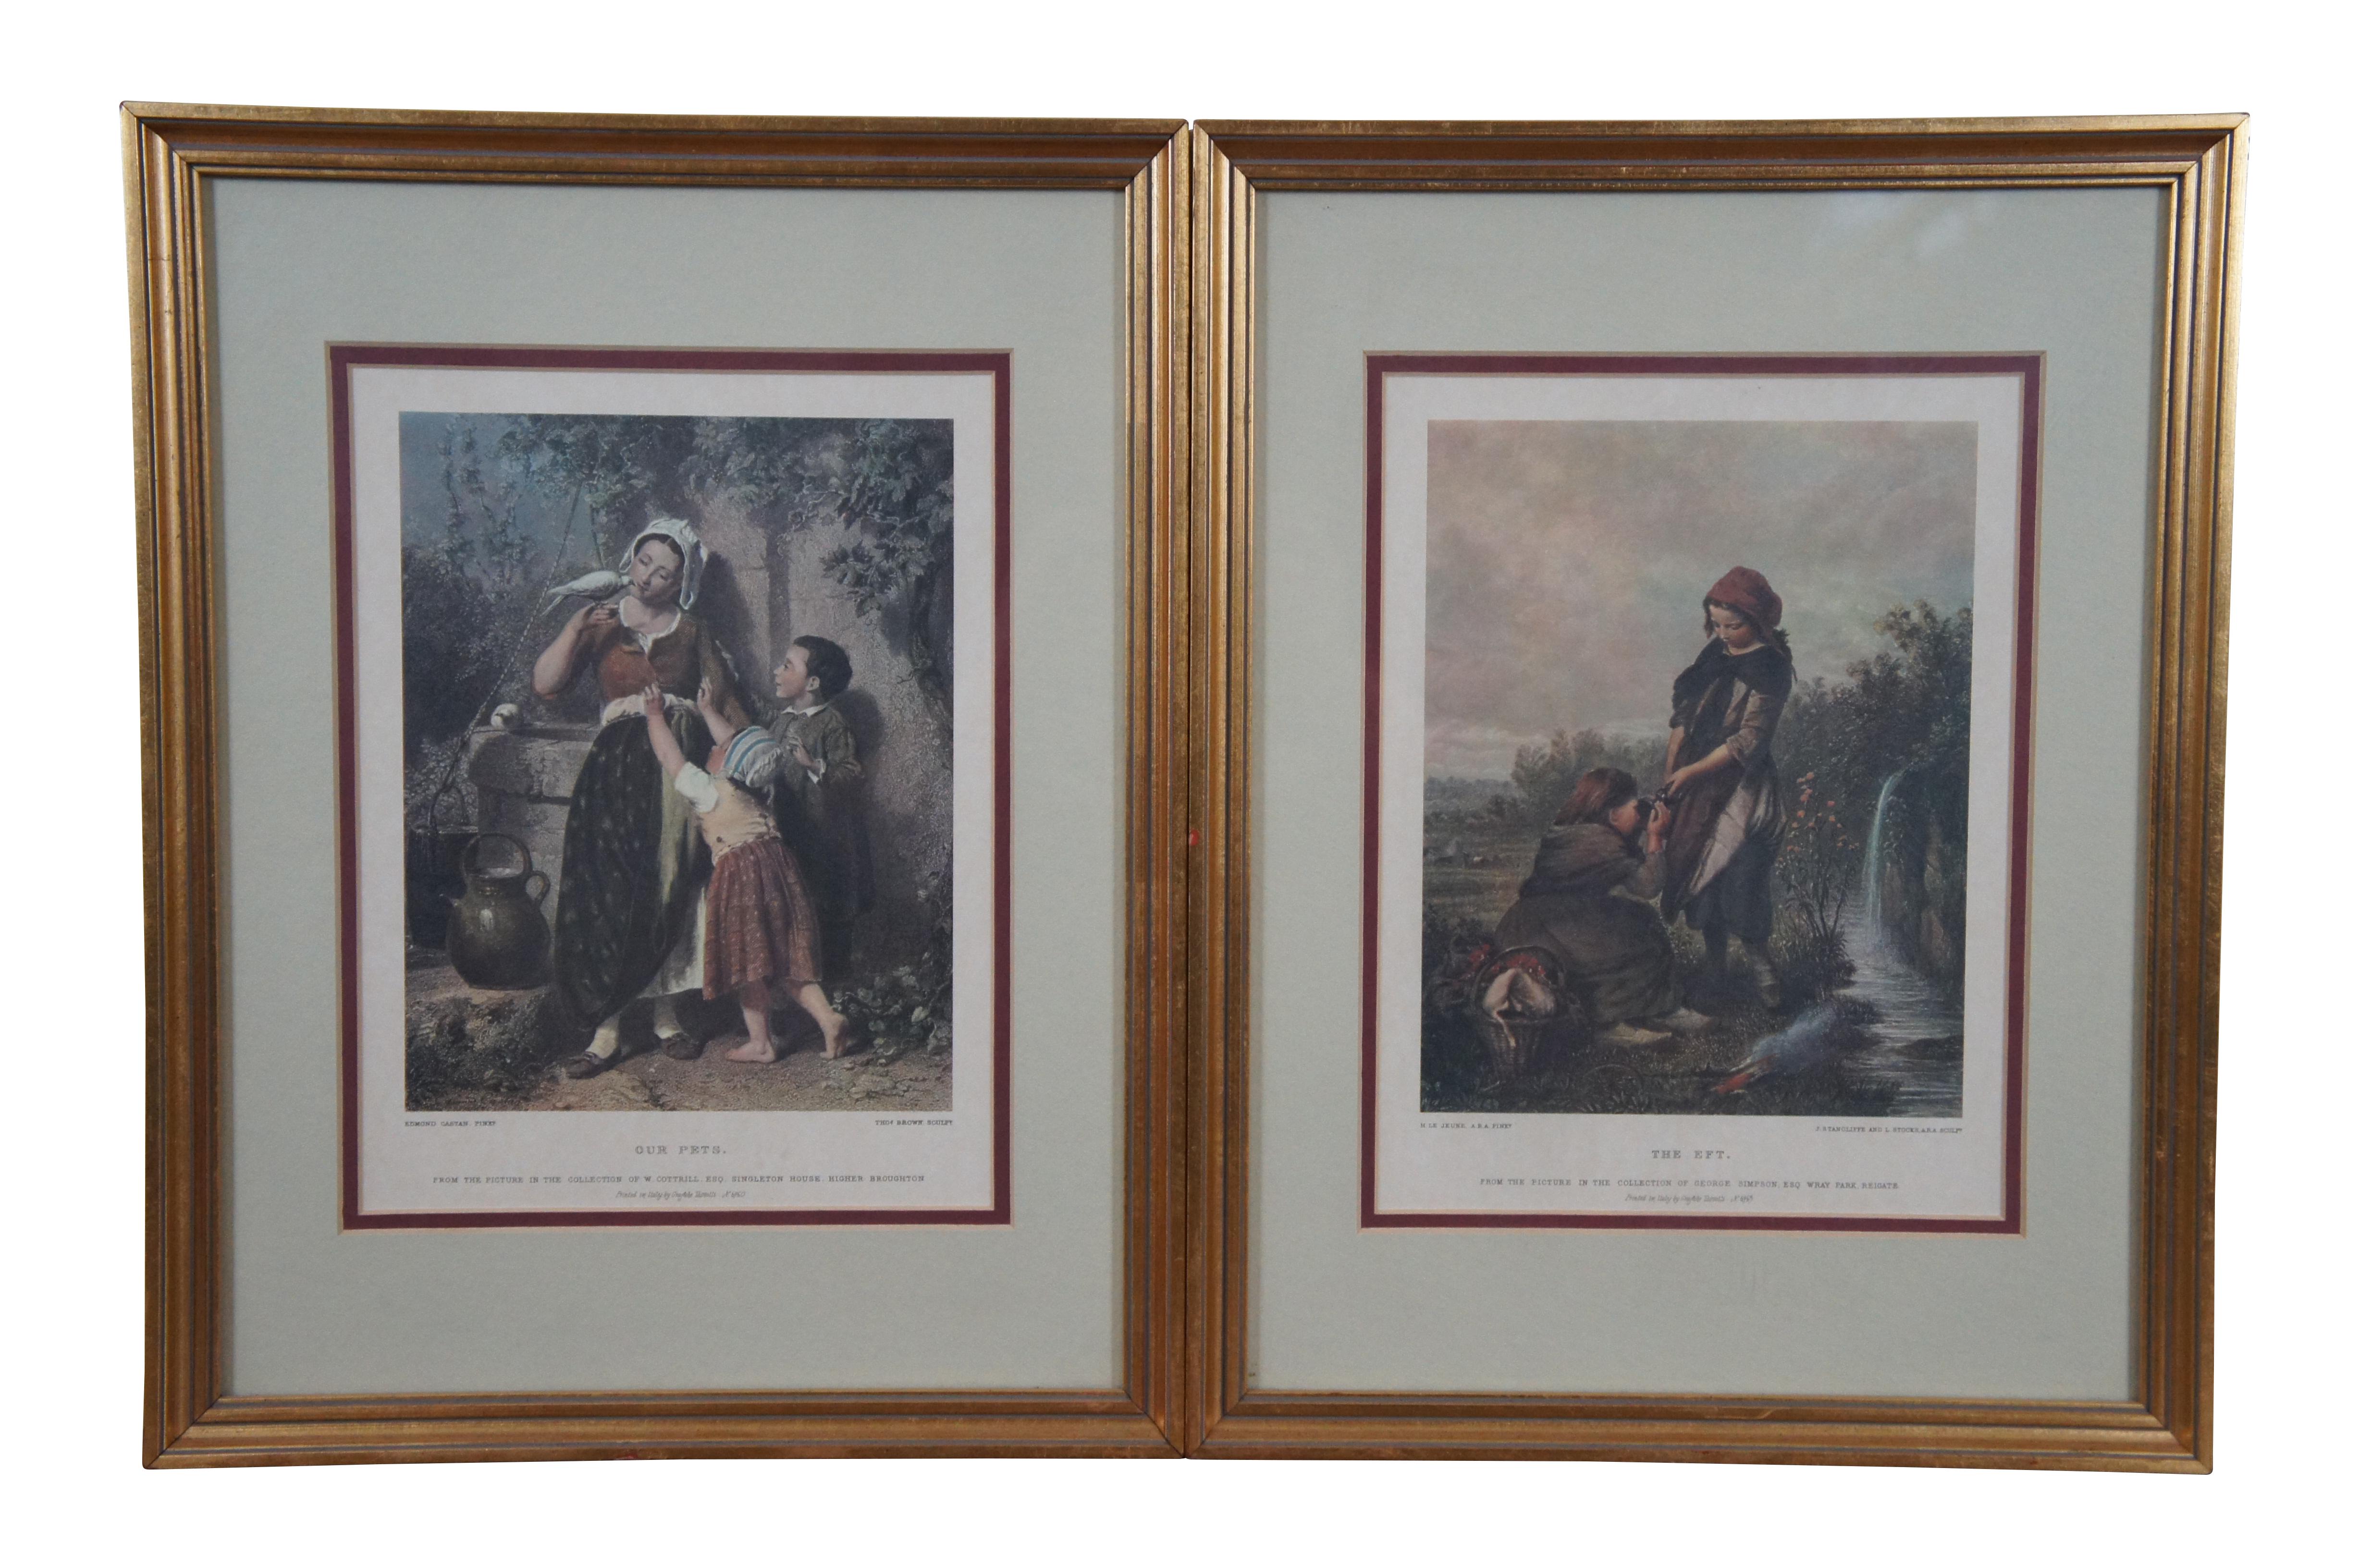 Set of three vintage lithograph prints: 